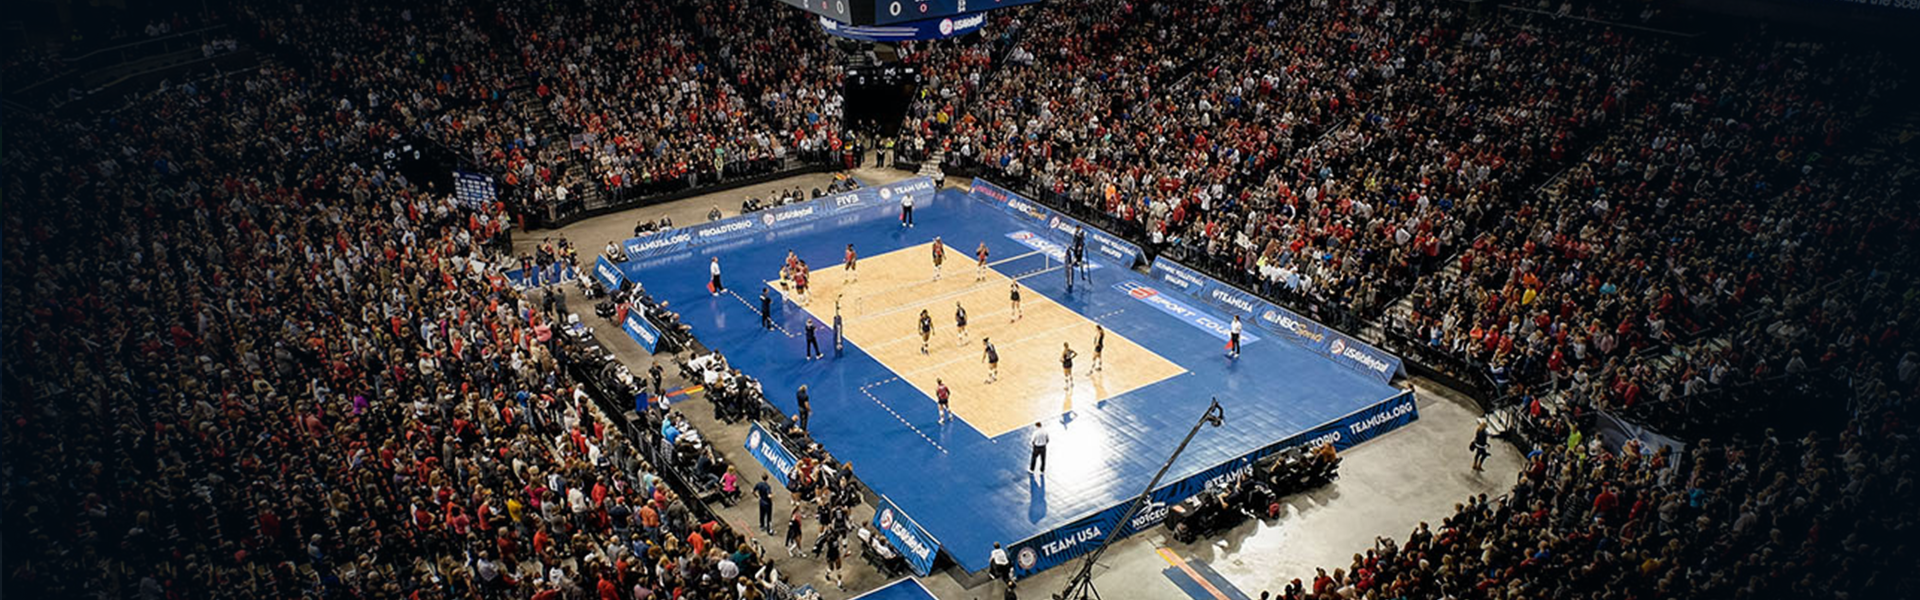 Image - USA Volleyball Banner